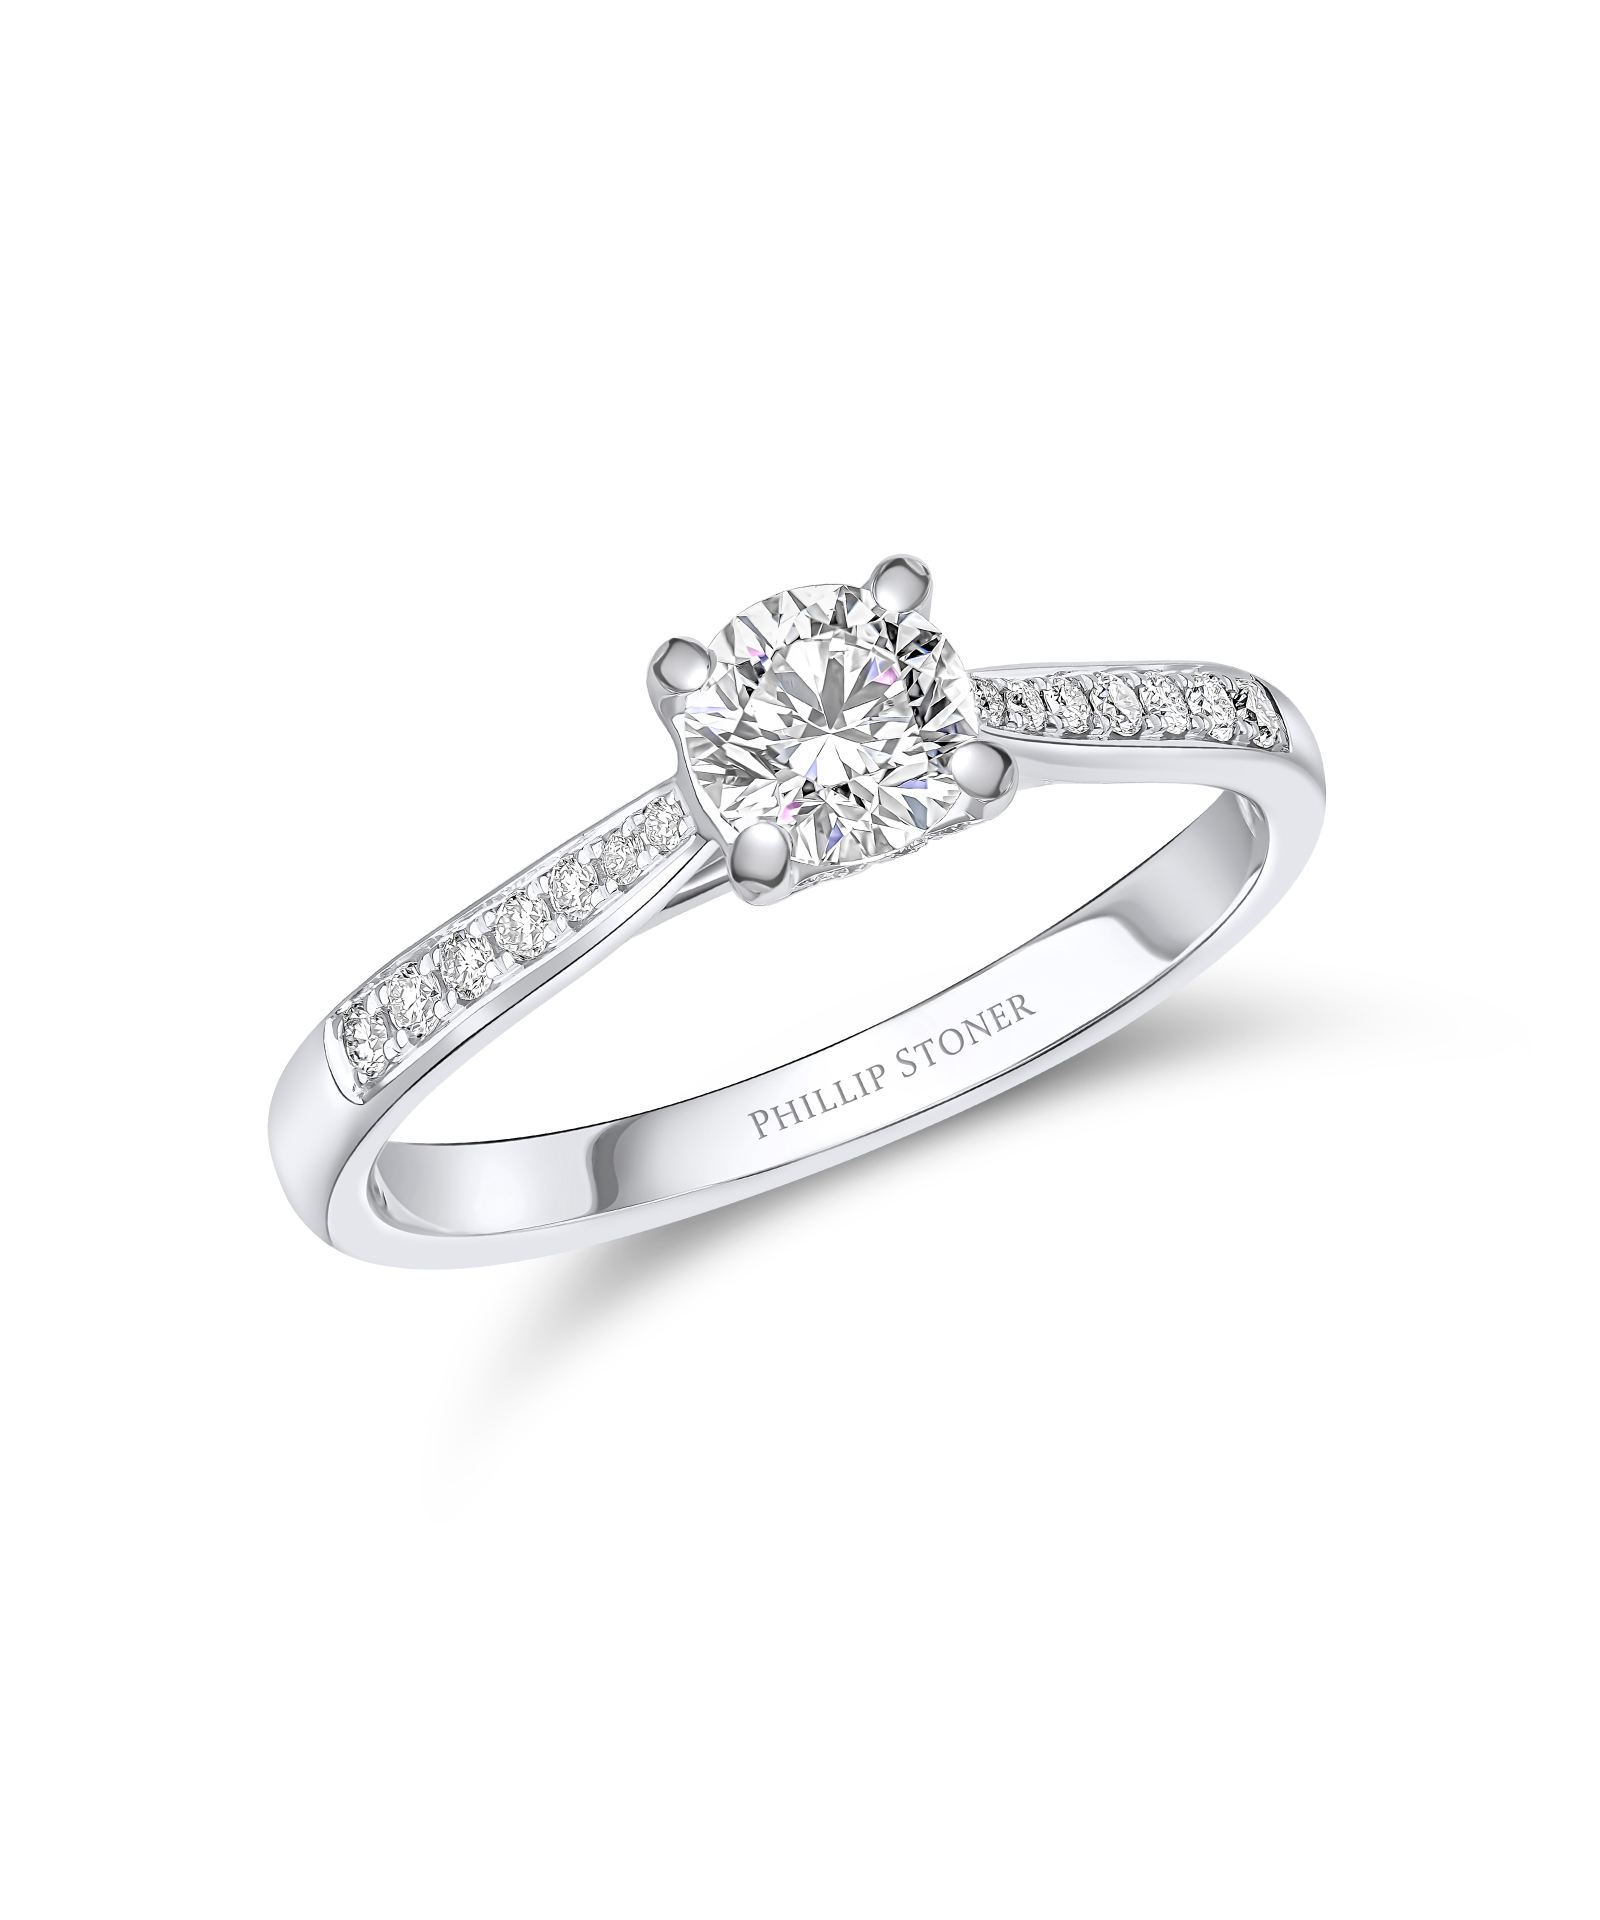 0.50ct Round Brilliant Diamond Engagement Ring with Pavé Set Shoulders - Phillip Stoner The Jeweller